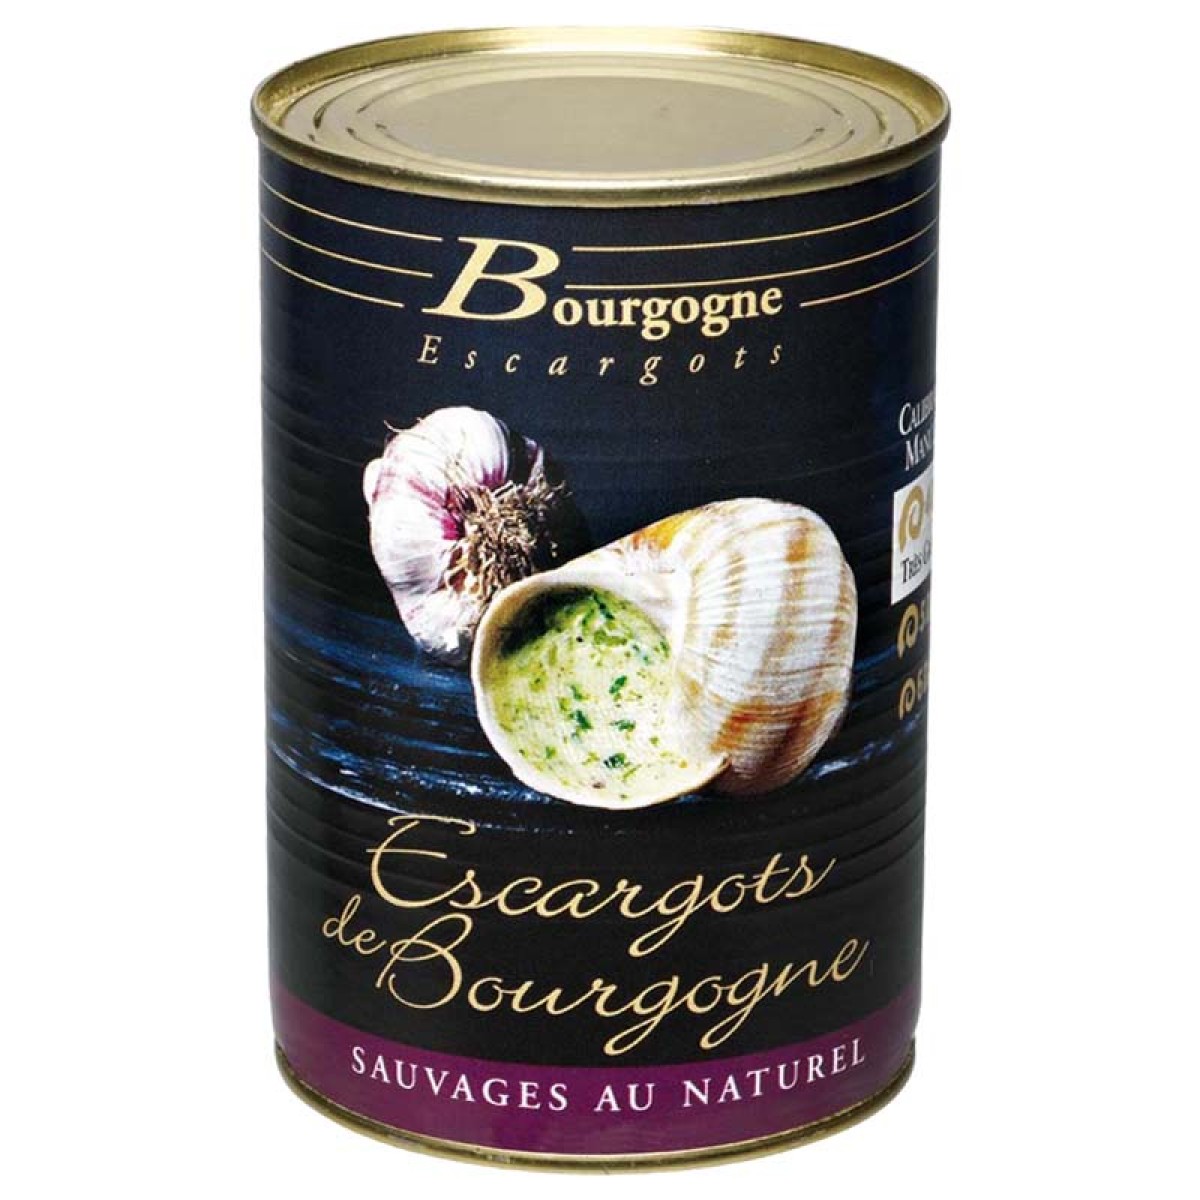 Assiette de 12 escargots de Bourgogne - Belle grosseur Bourgogne